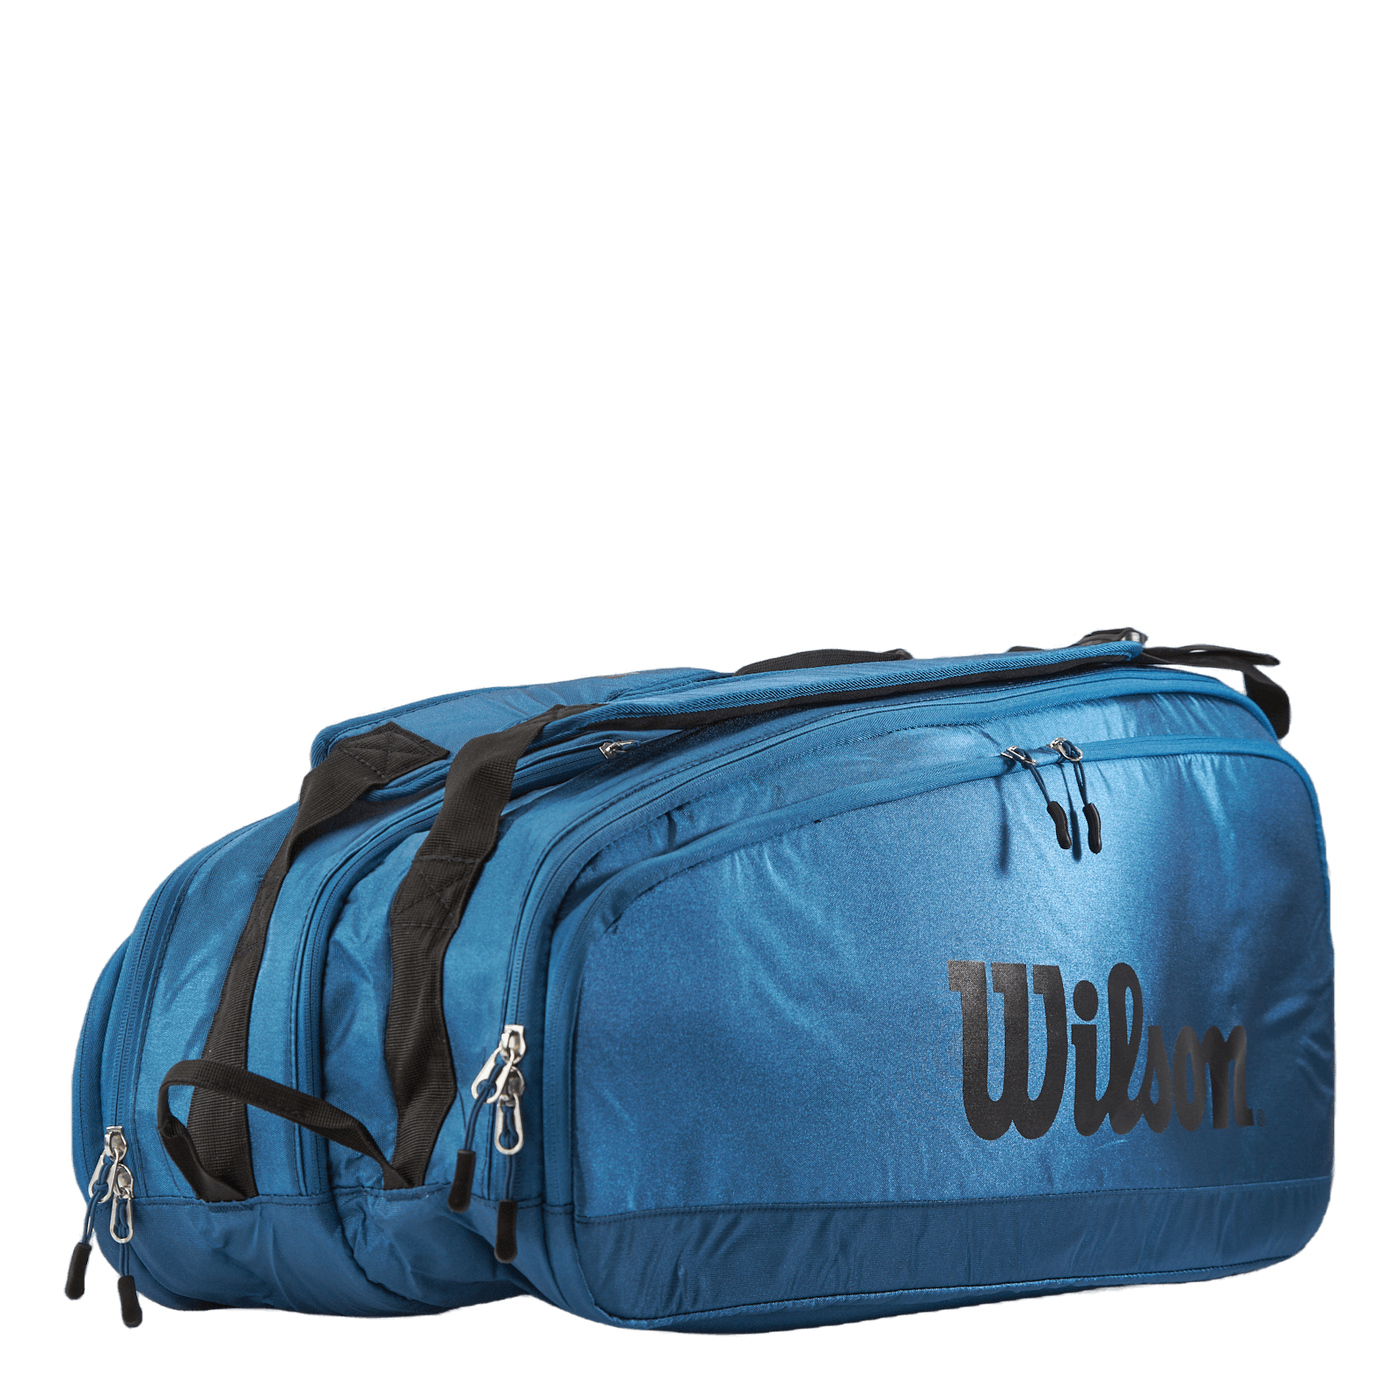 Ultra 12 Pk Tour Racket Bag Blue